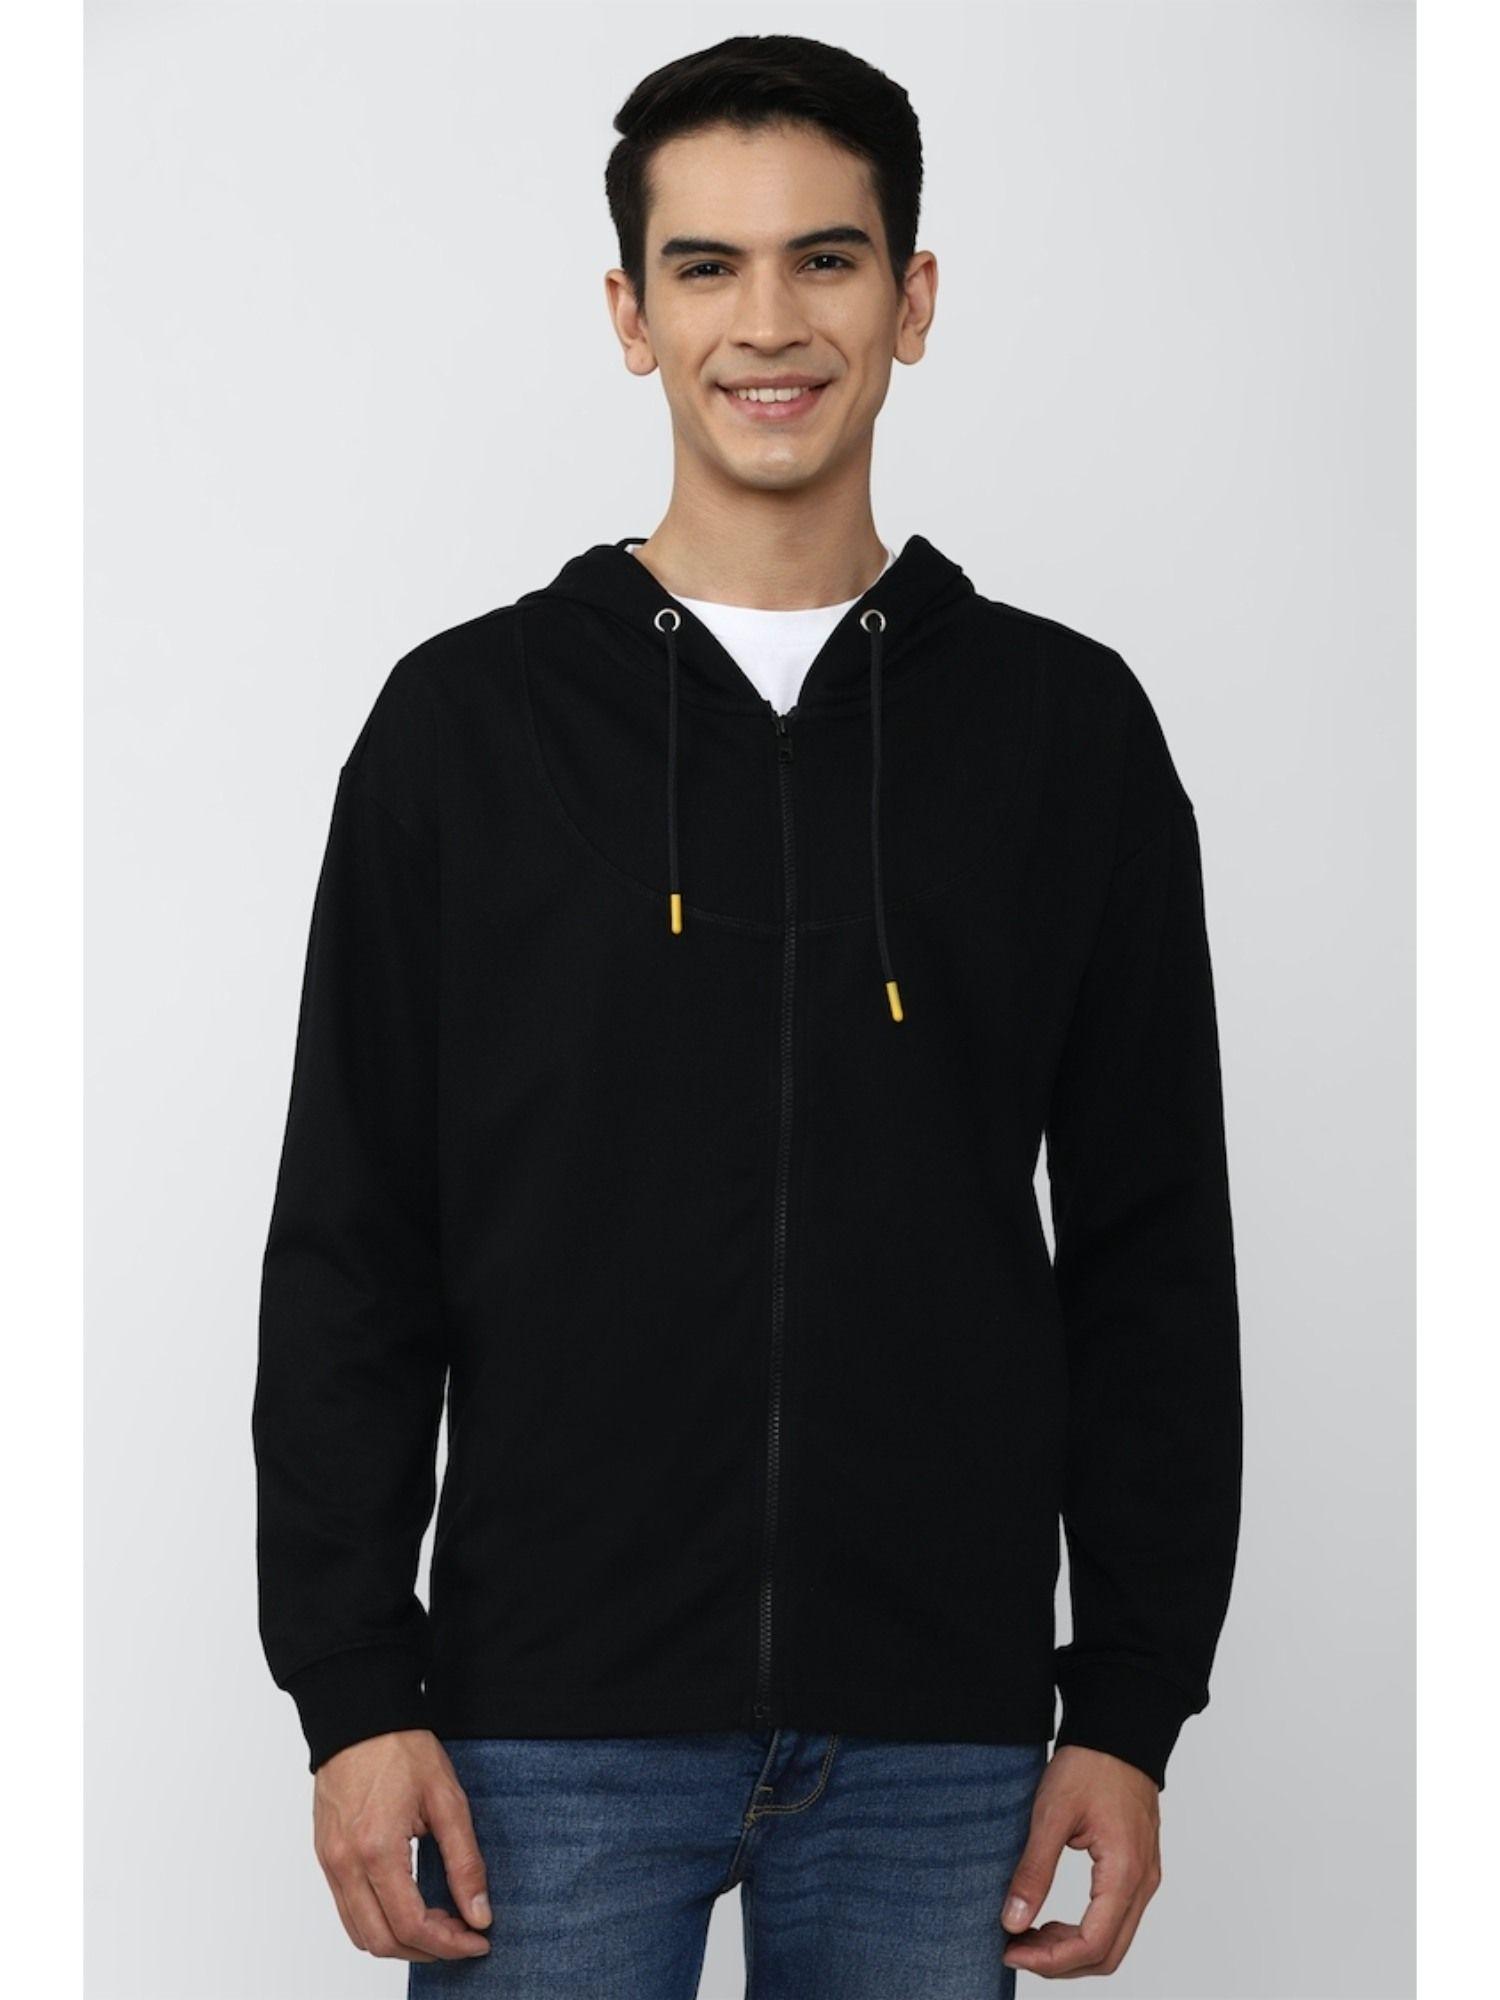 solid black solid sweatshirts and hoodies